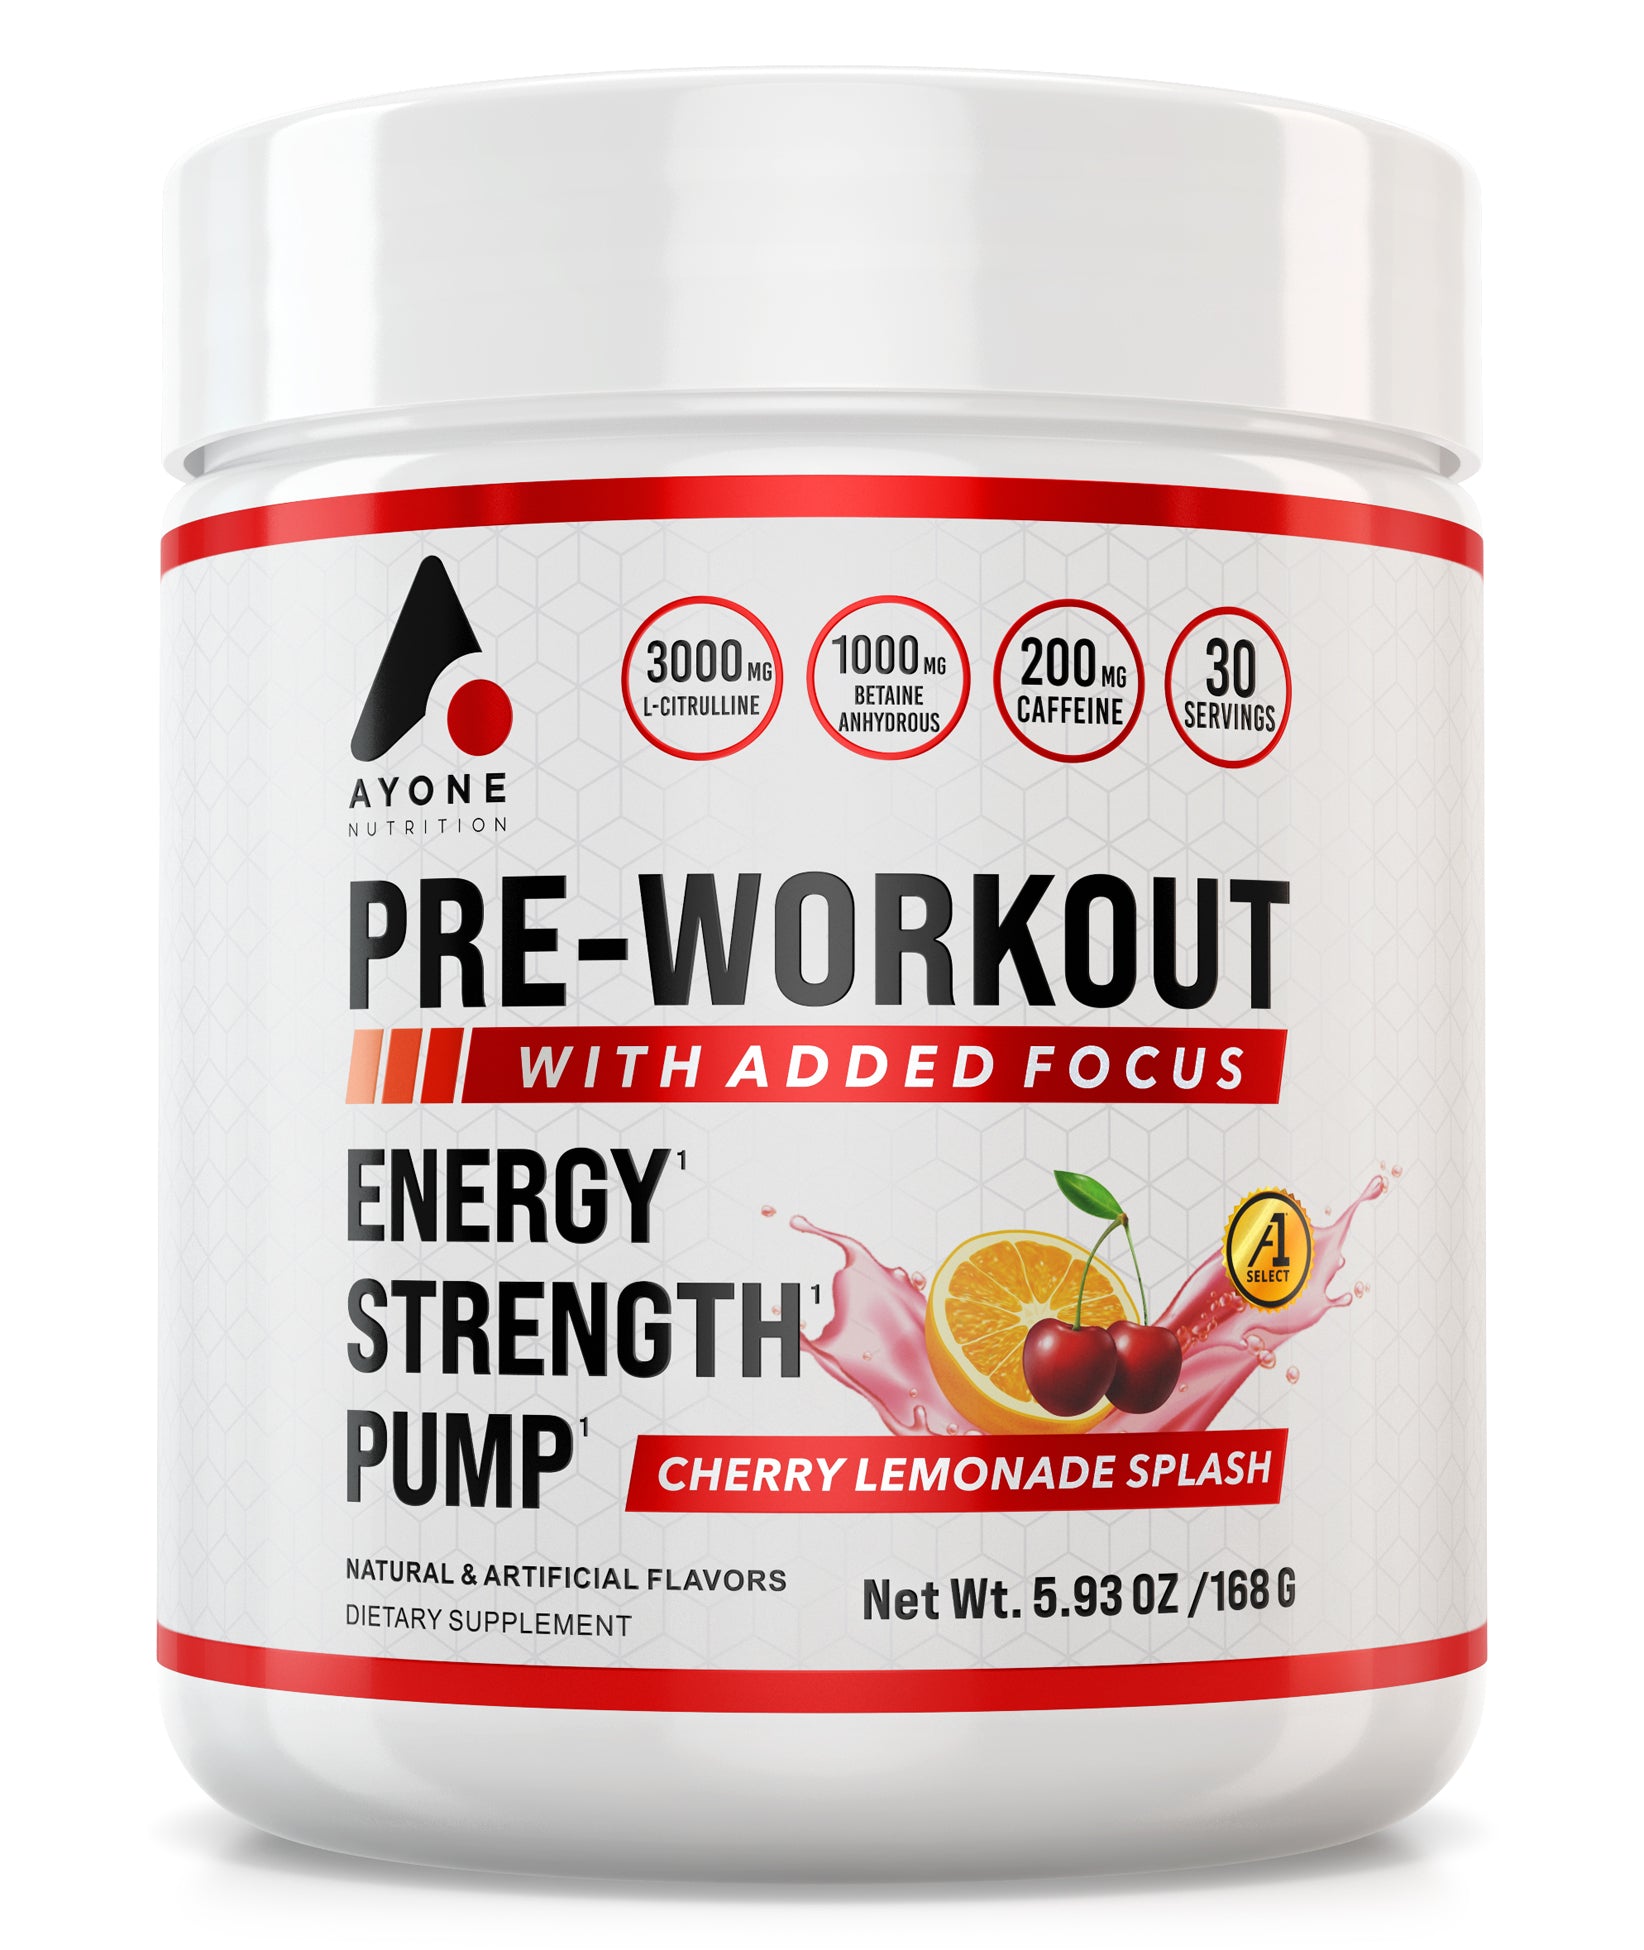 Ayone Nutrition Pre-Workout - Cherry Lemonade Splash